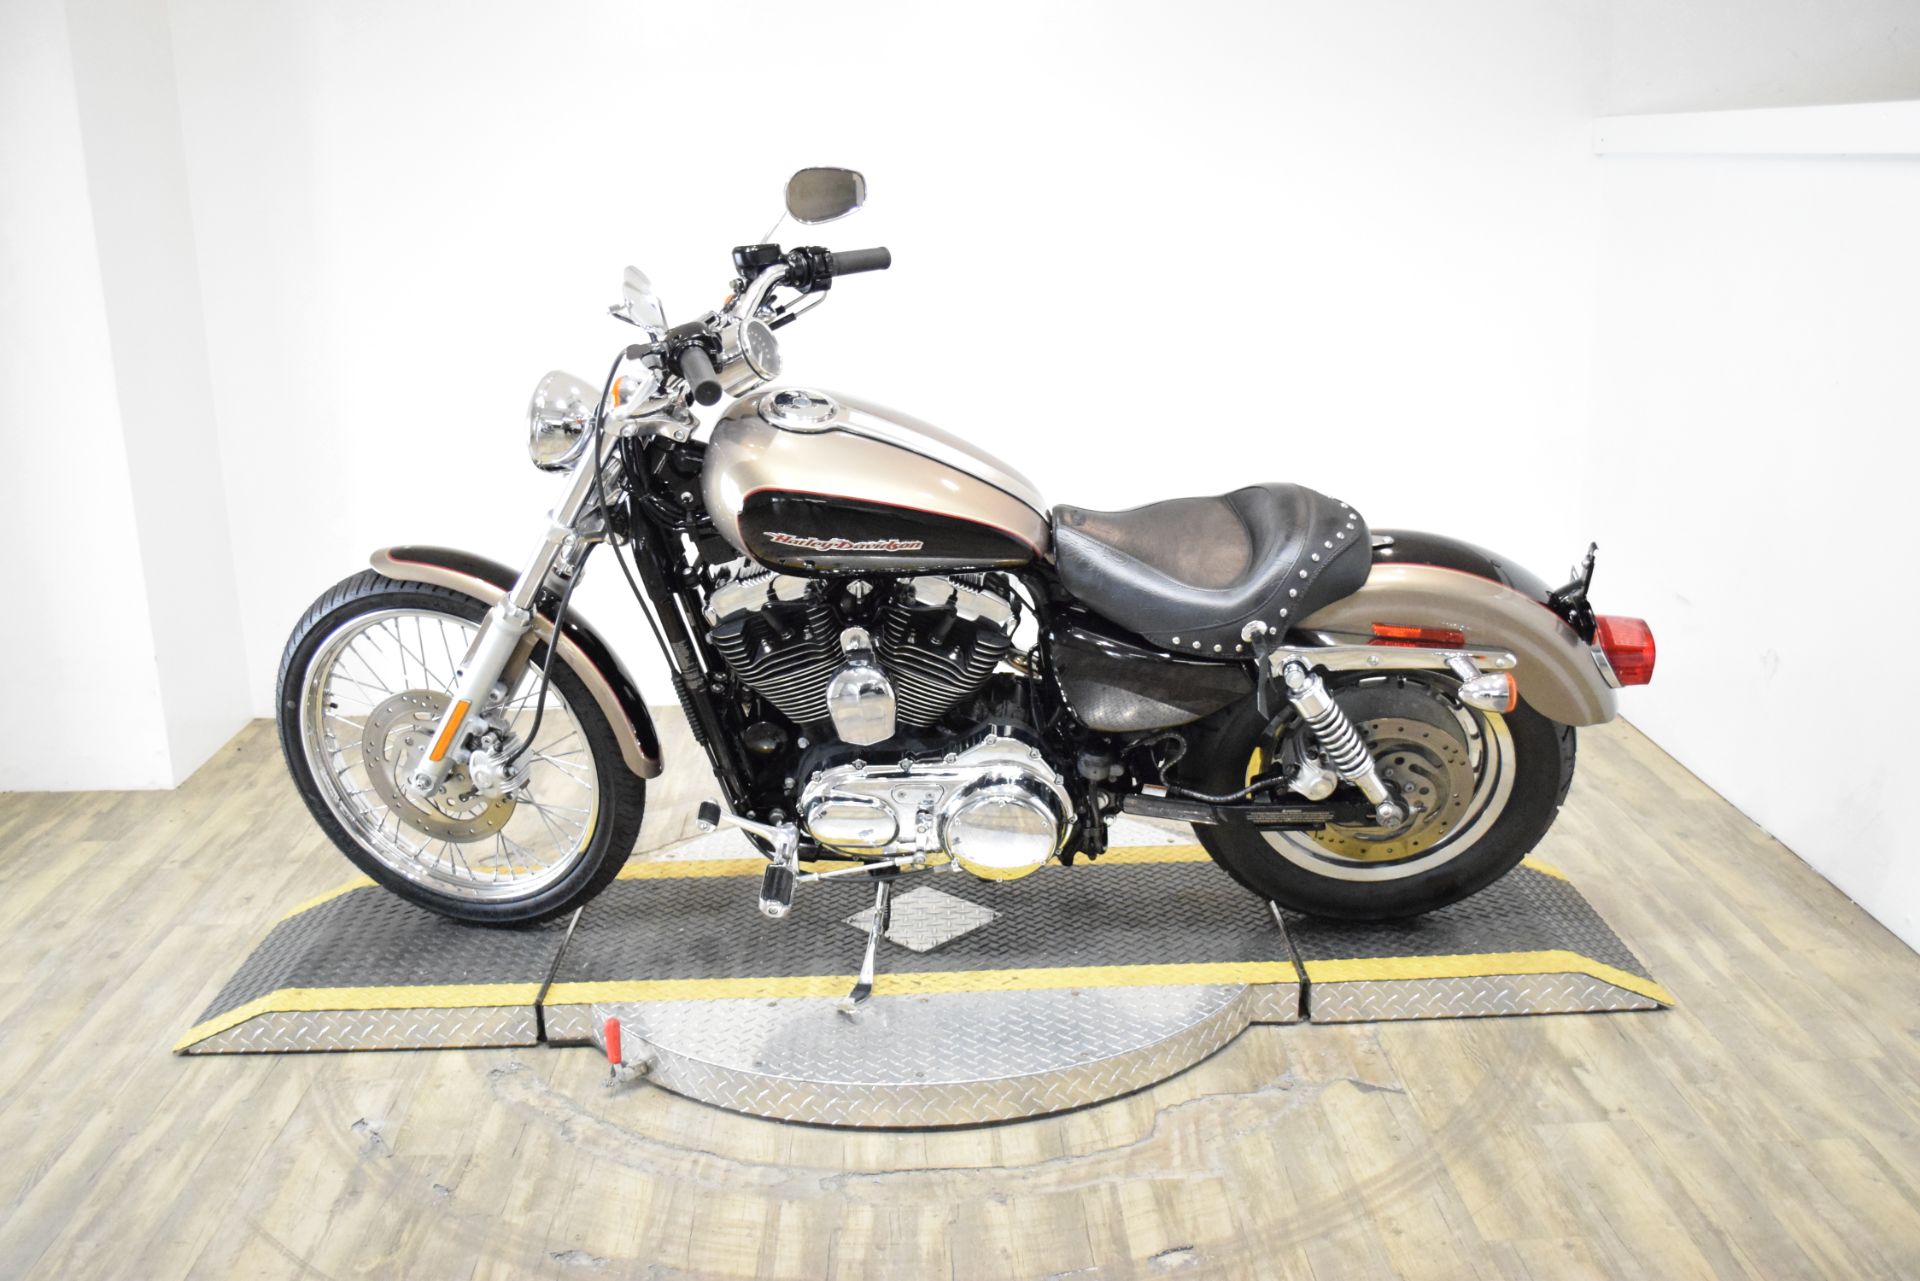 2005 Harley-Davidson Sportster® XL 1200 Custom in Wauconda, Illinois - Photo 15